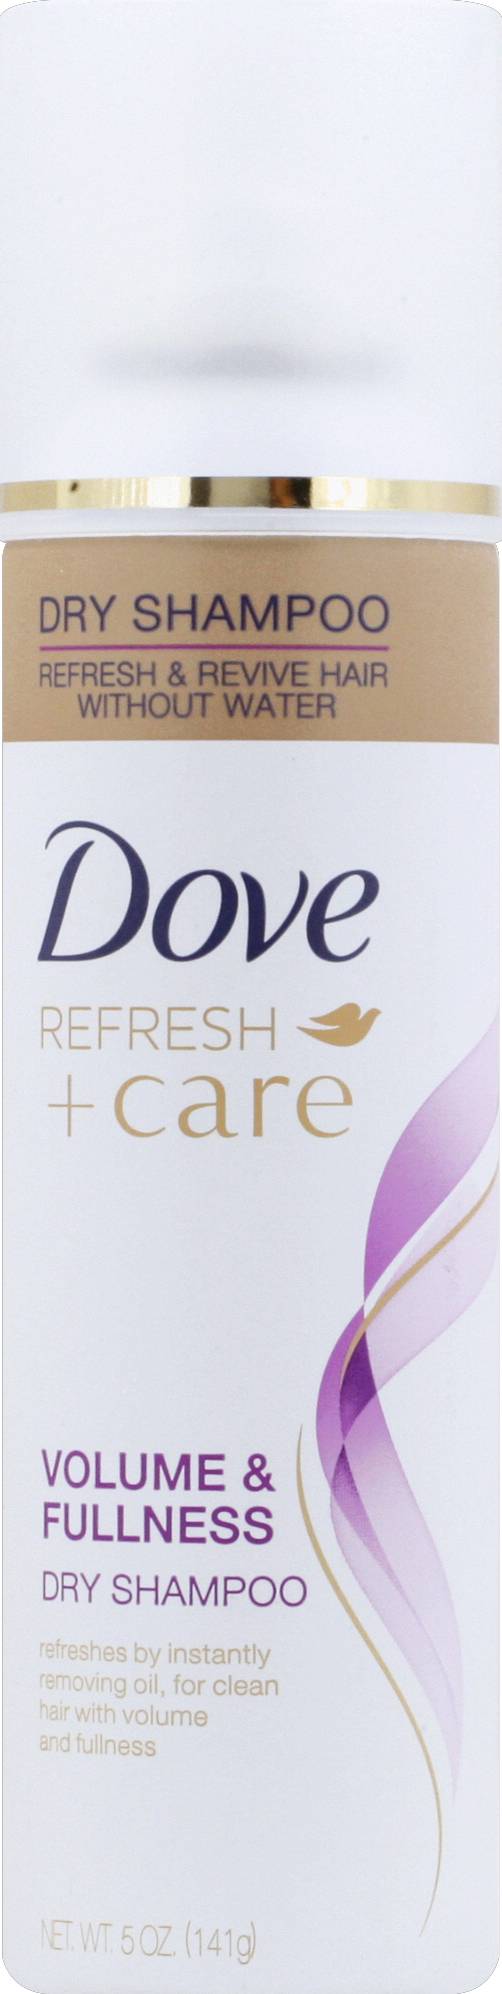 Dove Refresh+Care Volume & Fullness Dry Shampoo